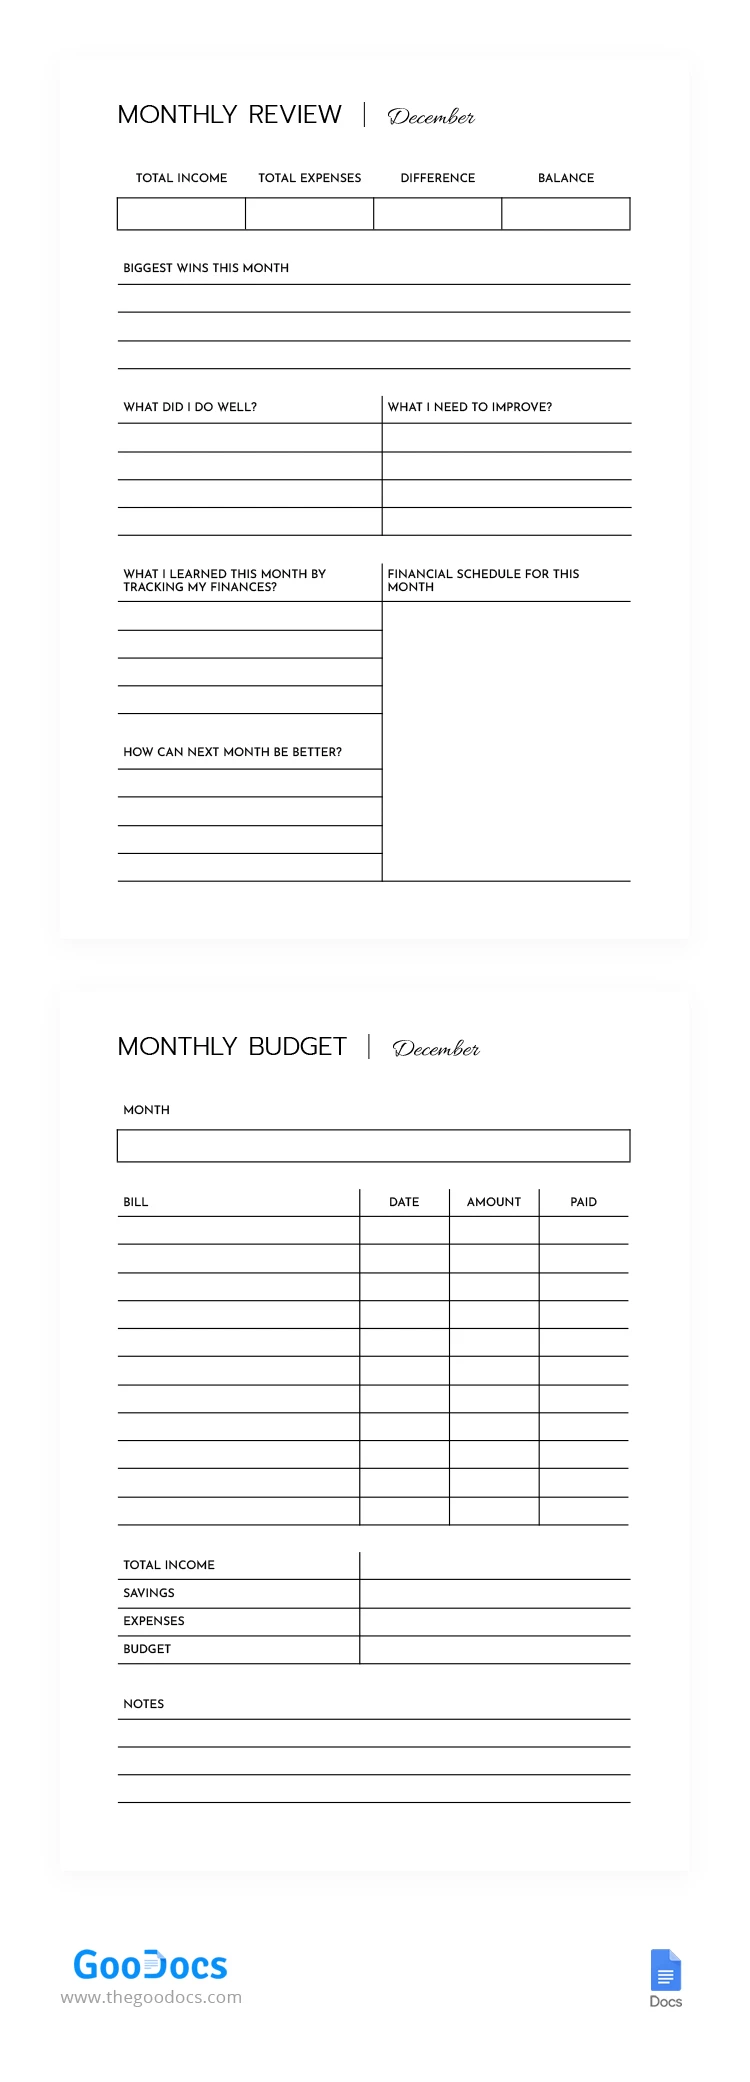 Budget financier mensuel - free Google Docs Template - 10068568